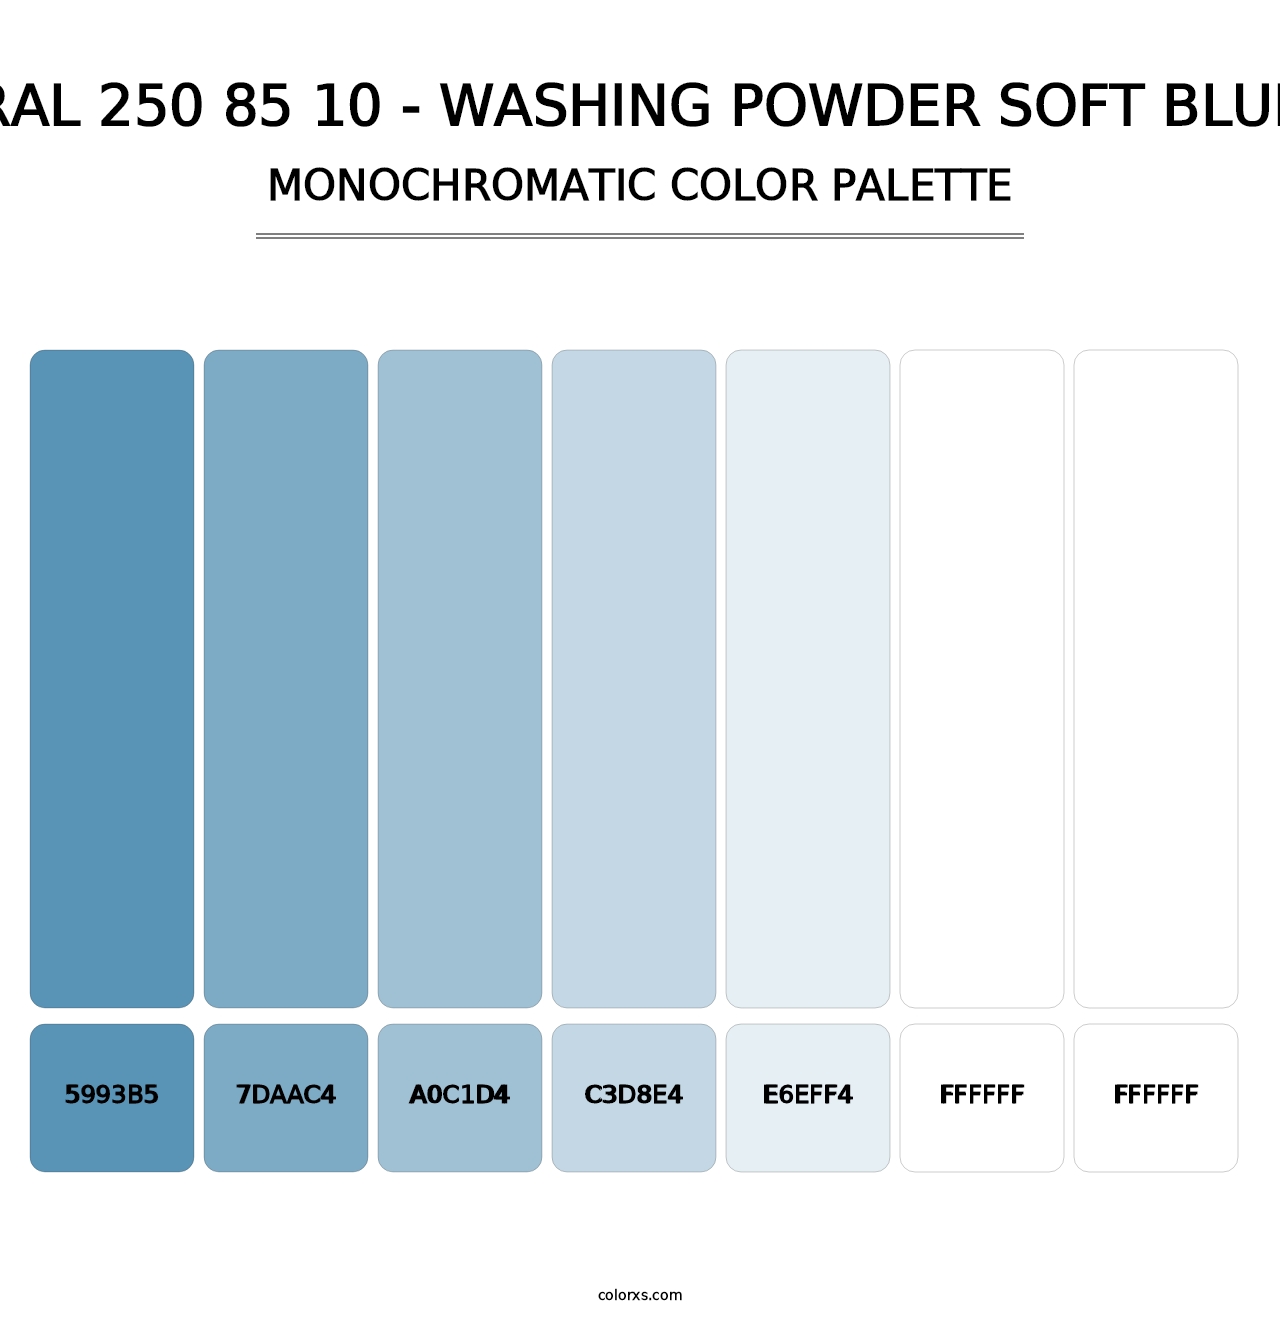 RAL 250 85 10 - Washing Powder Soft Blue - Monochromatic Color Palette